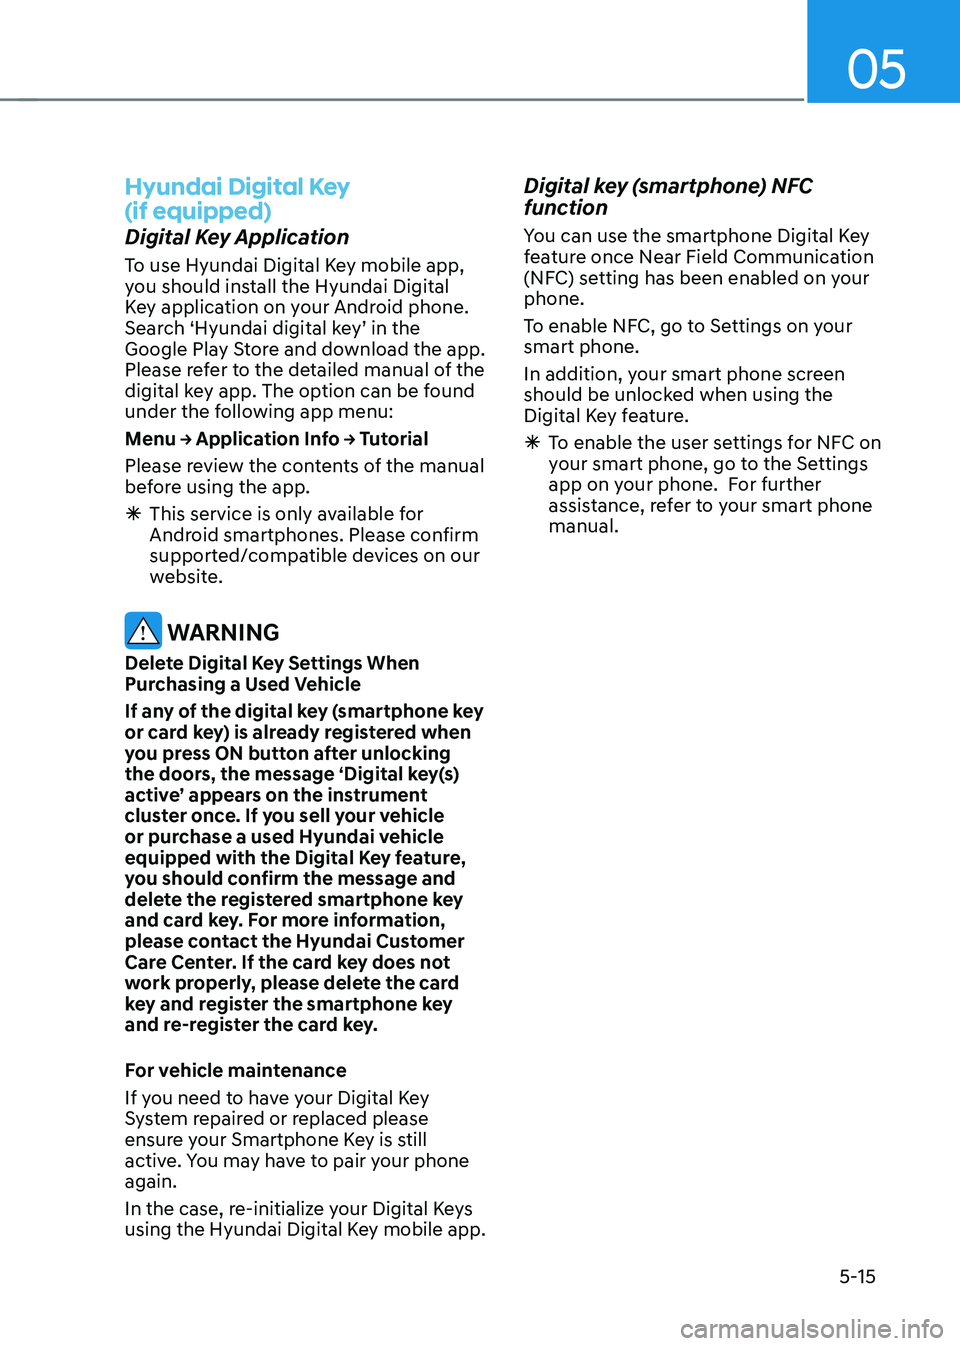 HYUNDAI TUCSON 2022 Service Manual 05
5-15
Hyundai Digital Key  
(if equipped)
Digital Key Application
To use Hyundai Digital Key mobile app, 
you should install the Hyundai Digital 
Key application on your Android phone. 
Search ‘Hy